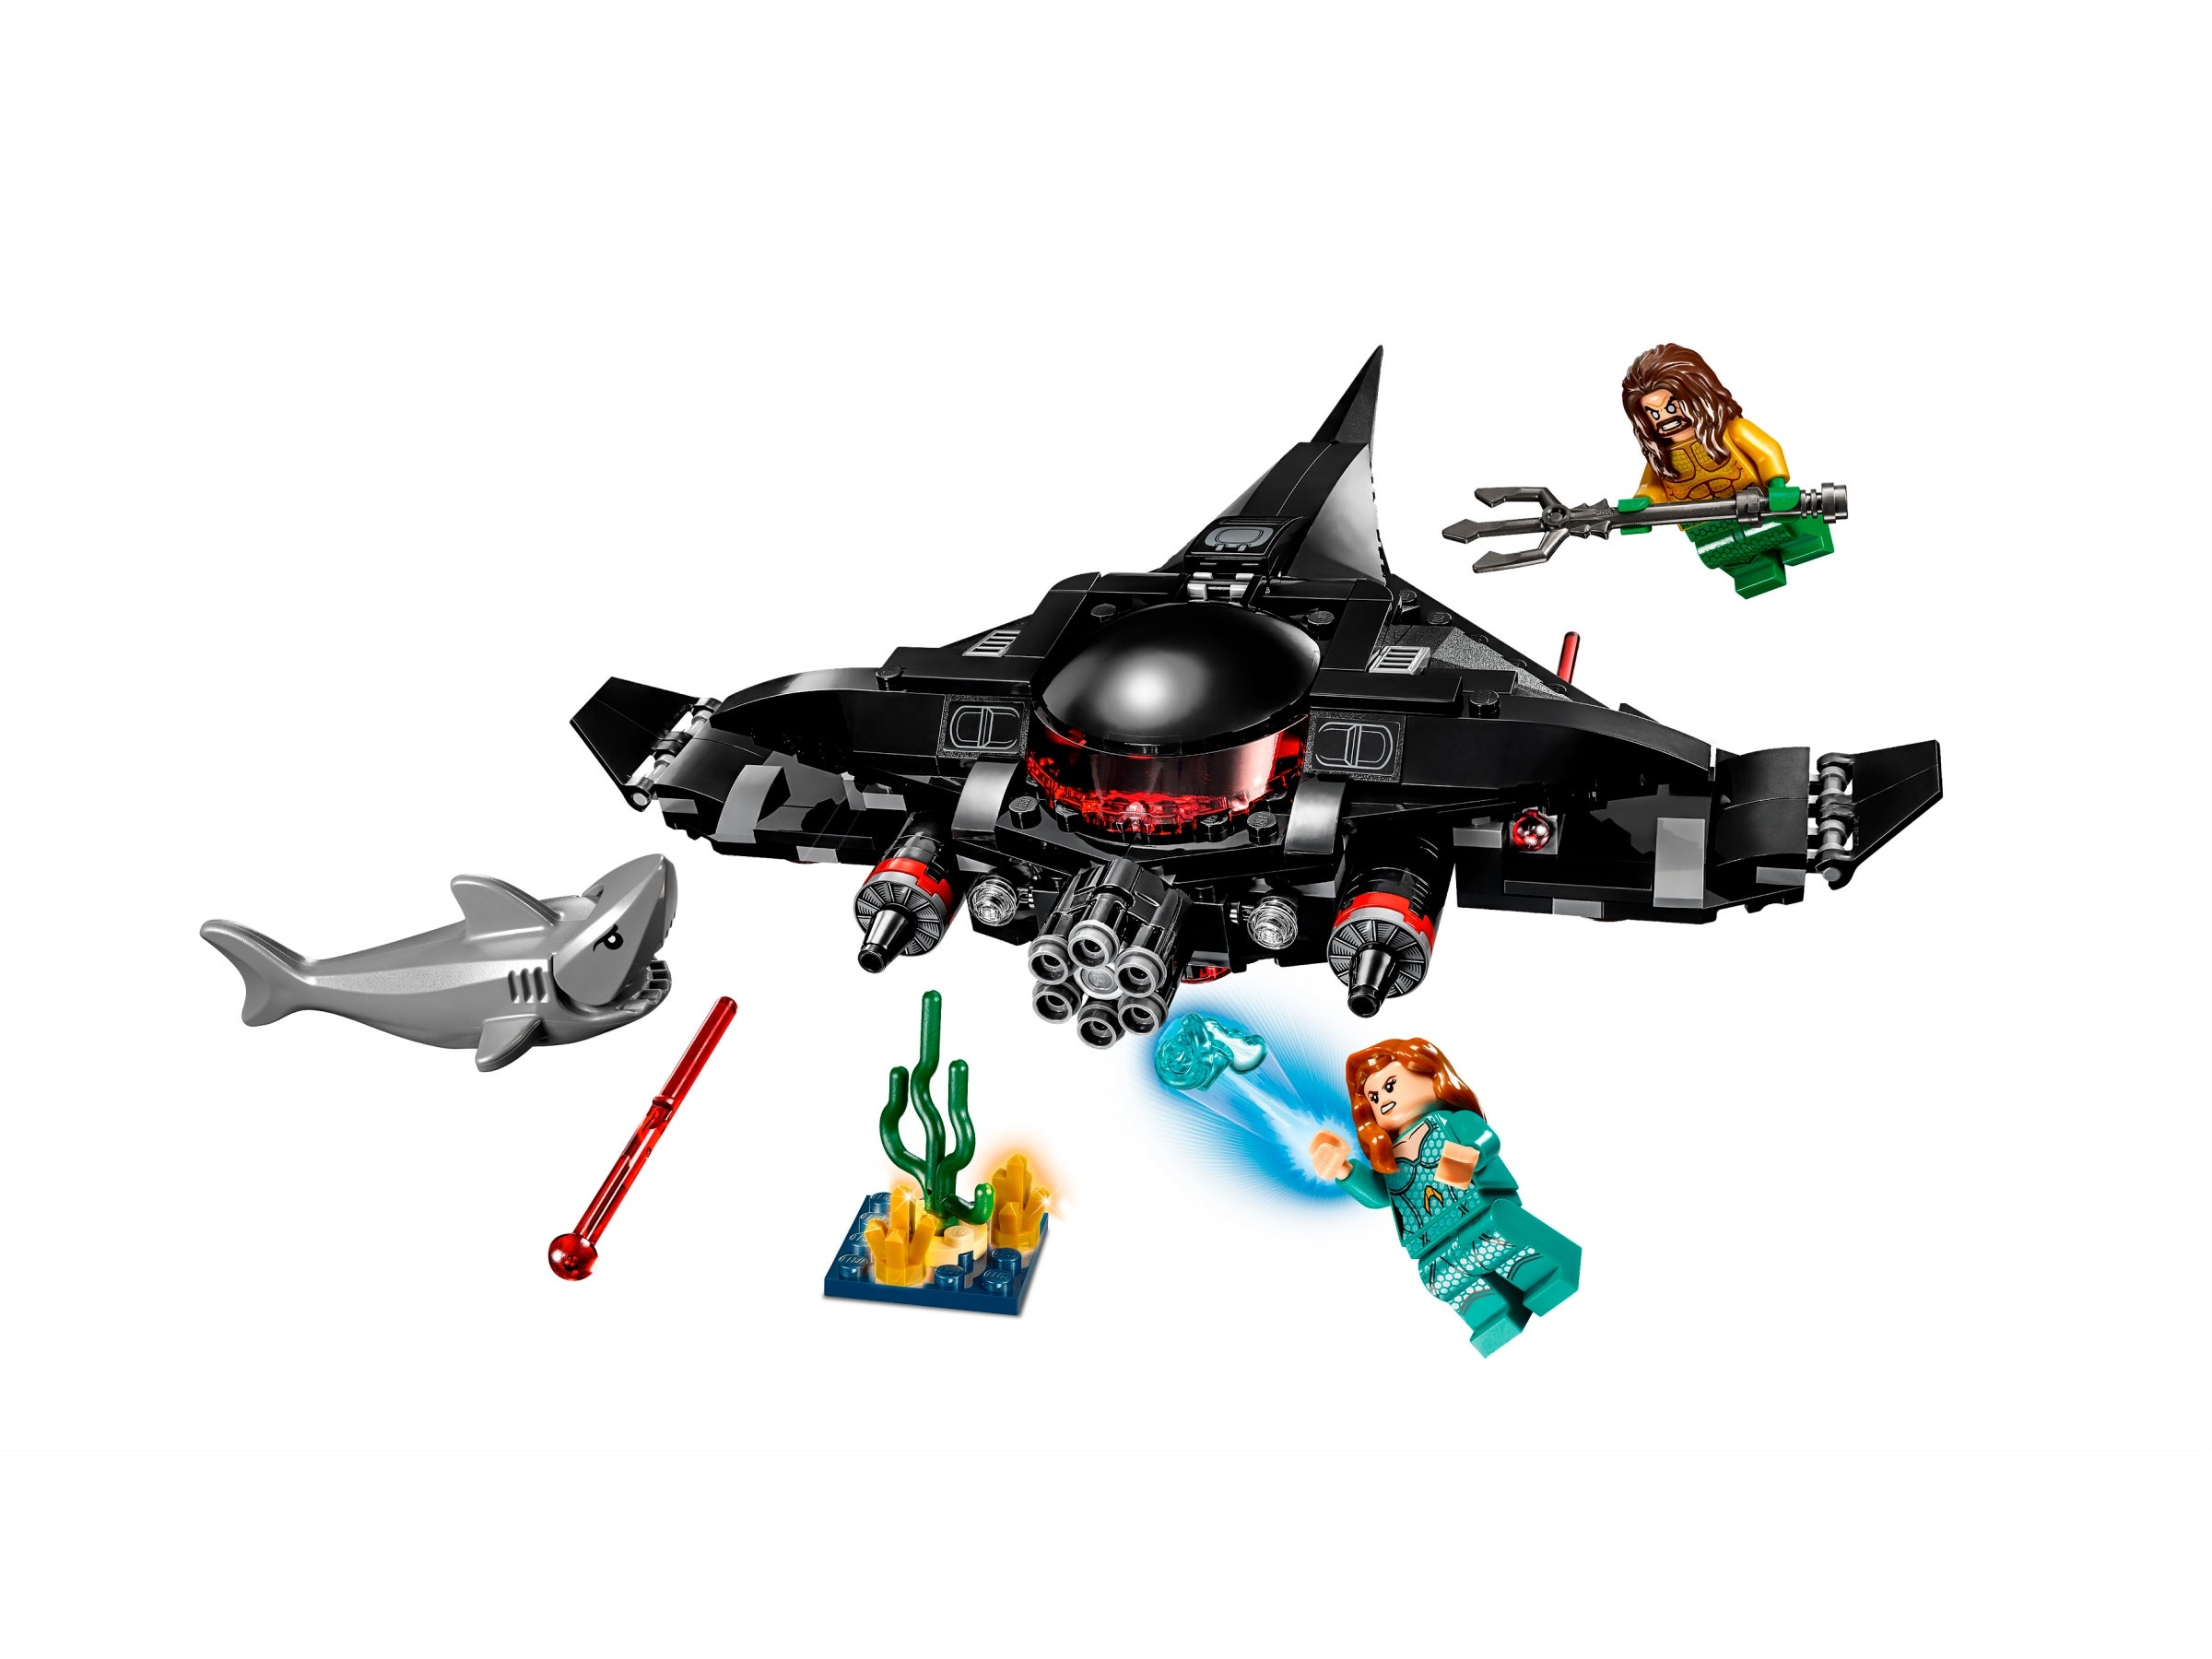 LEGO de collection Figurine-DC HEROS Aquaman-neuf et complet 